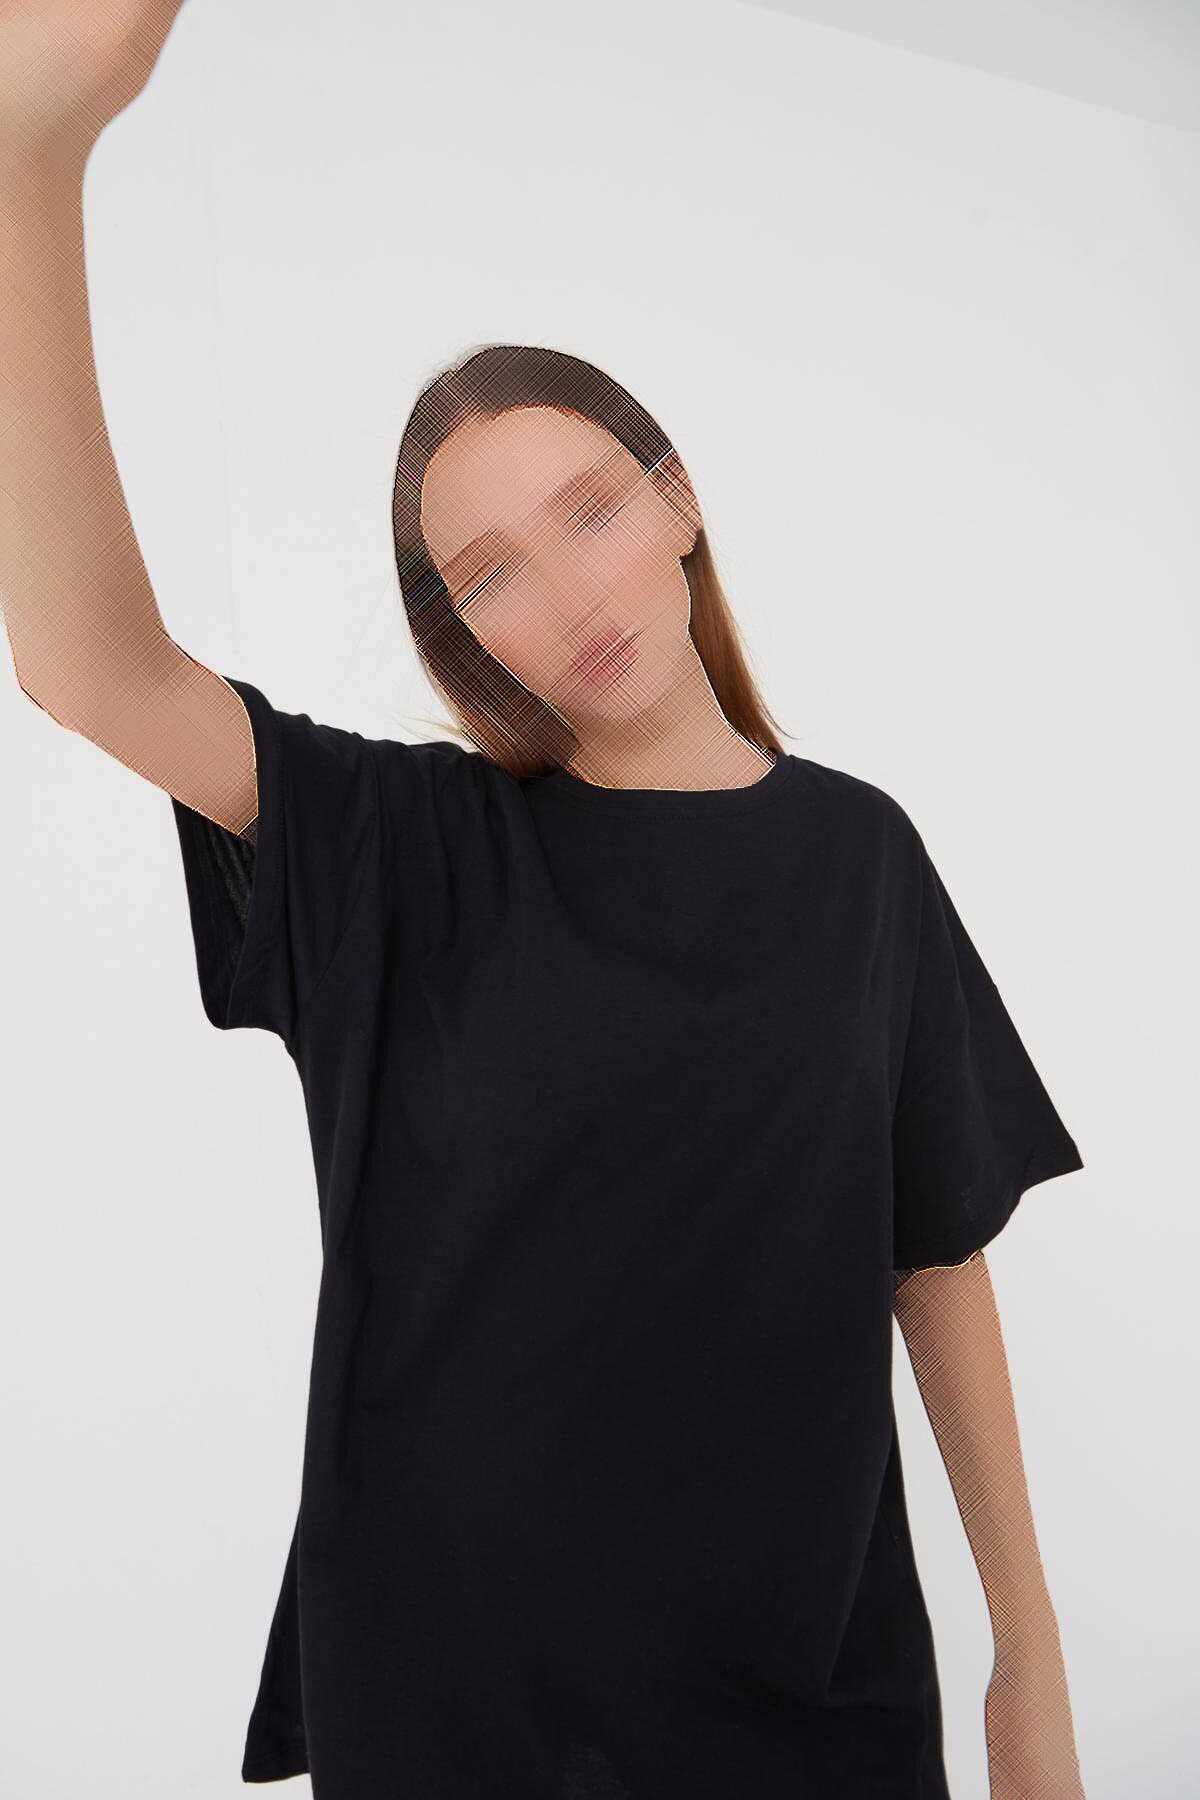 تیشرت زنانه قیمت برند Addax رنگ مشکی کد ty36891228